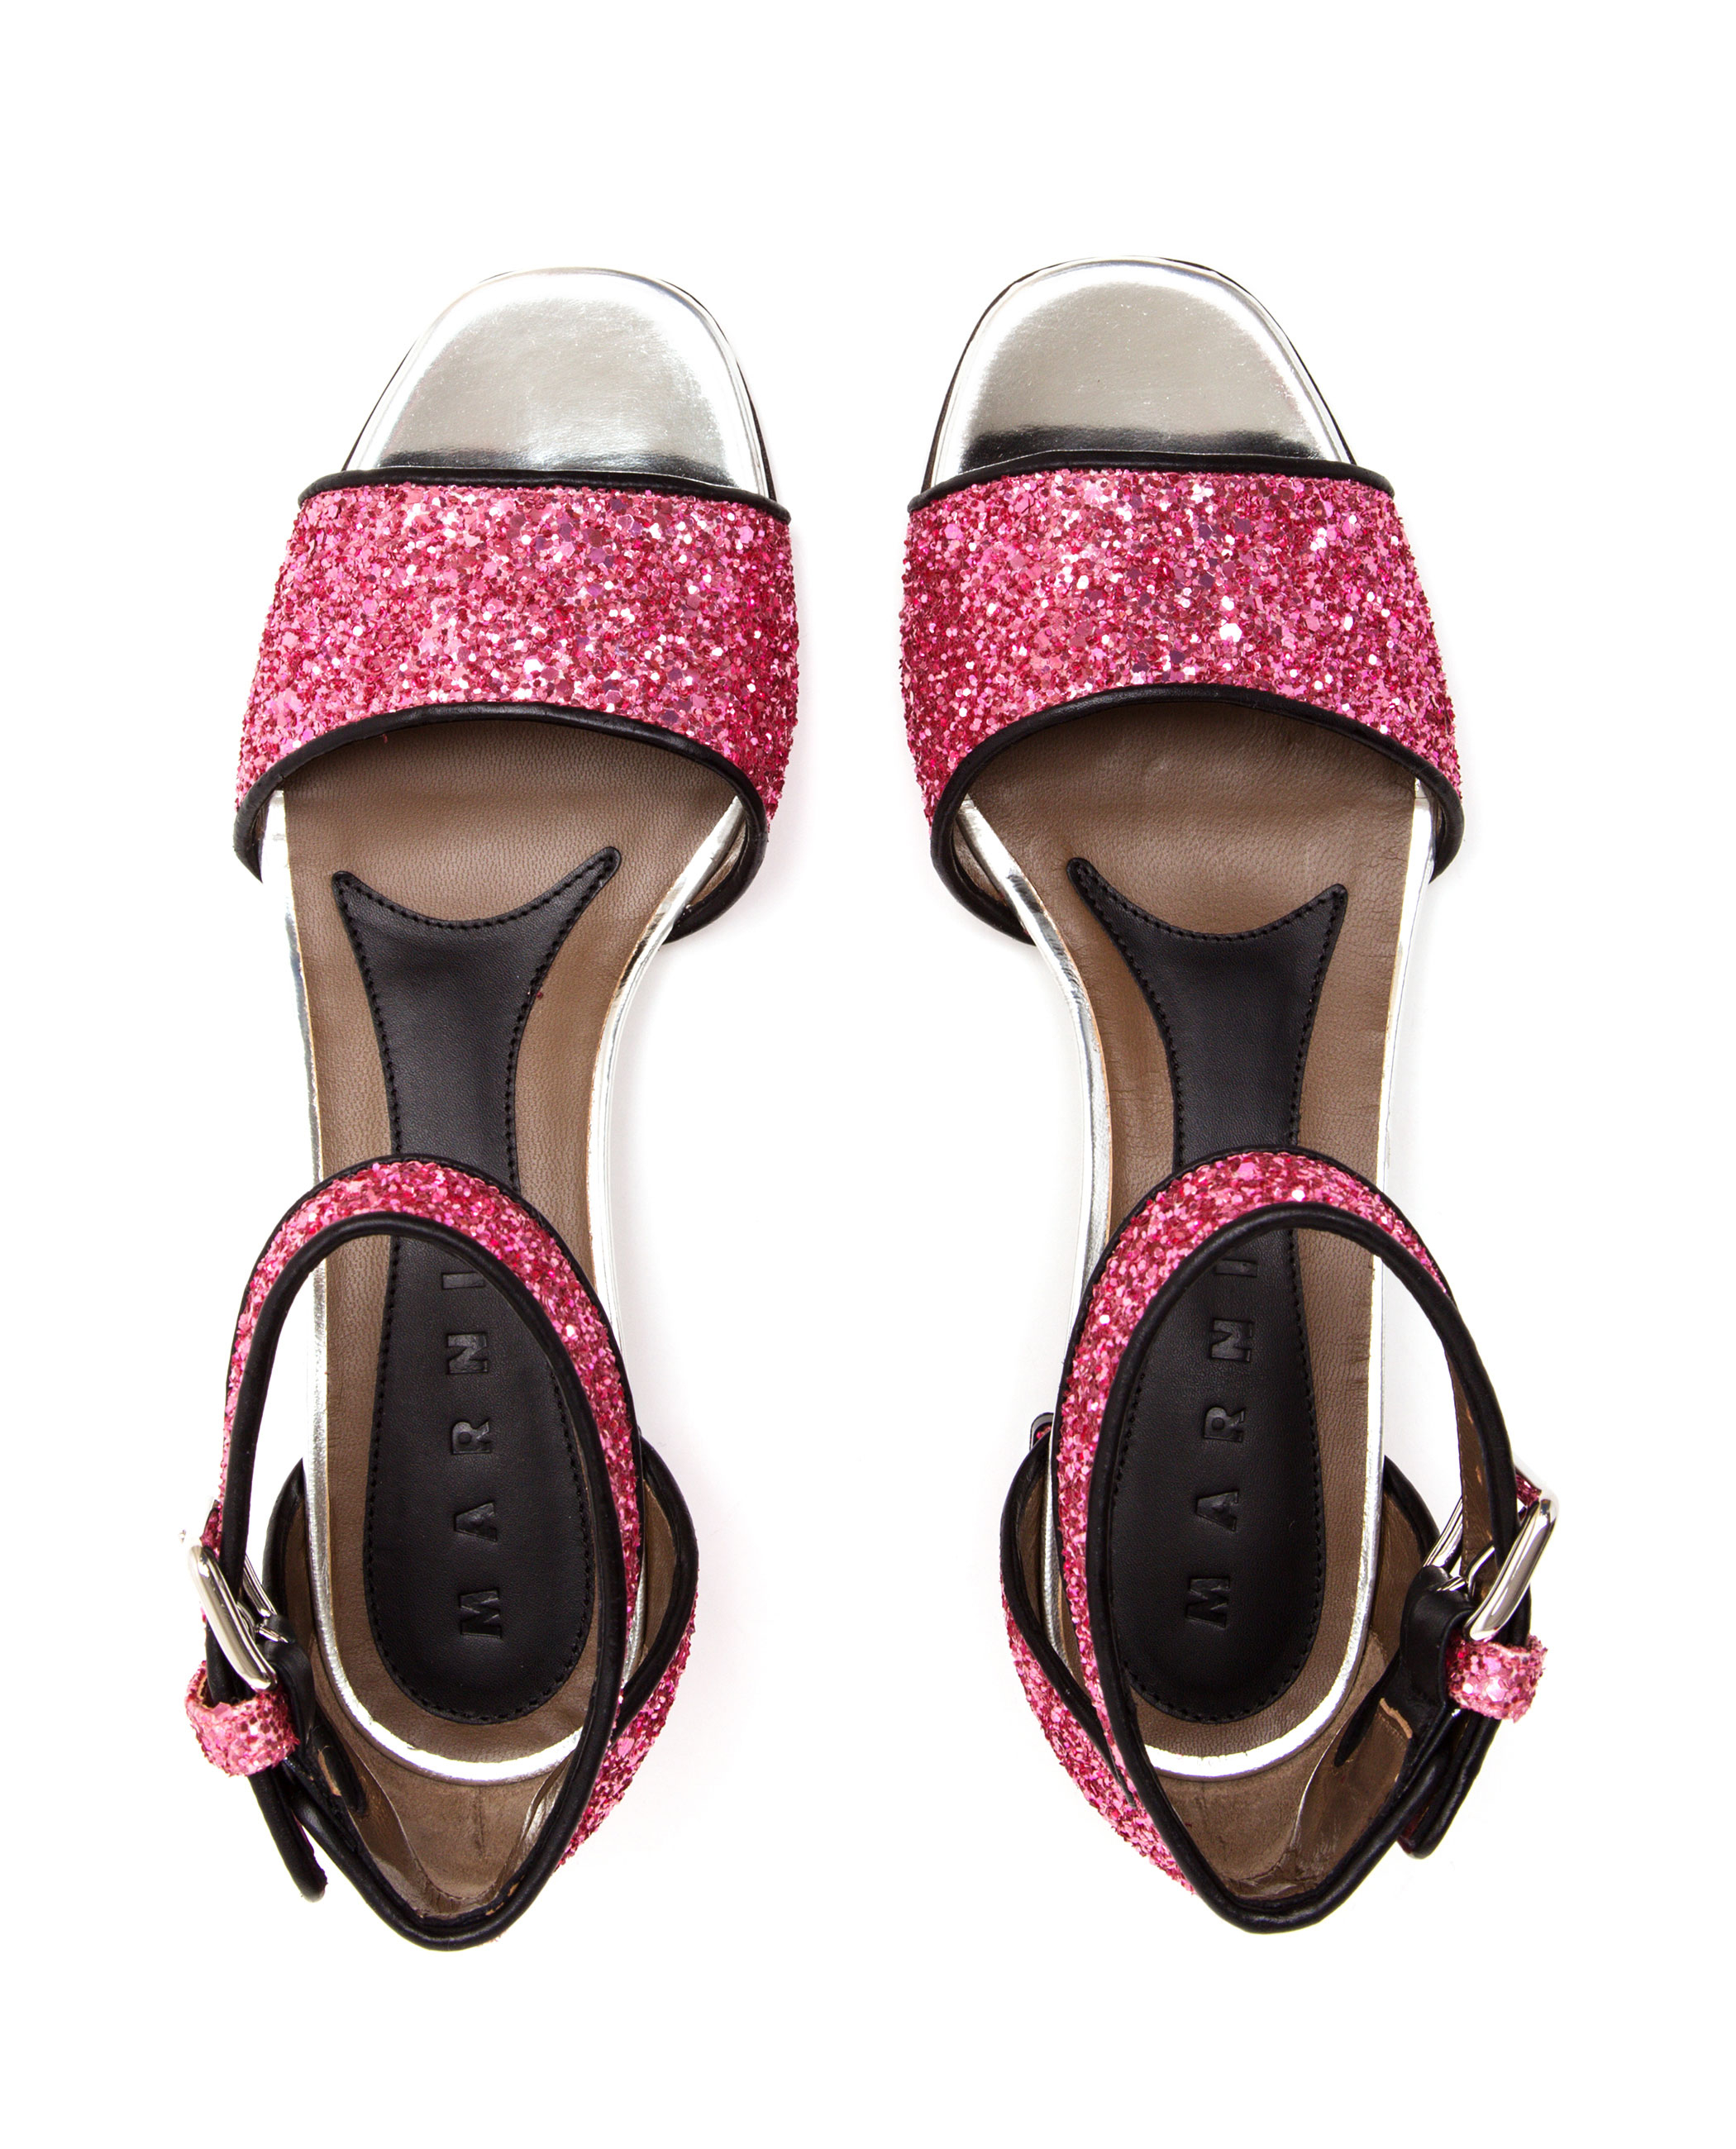 Lyst - Marni Glitter Sandals in Pink